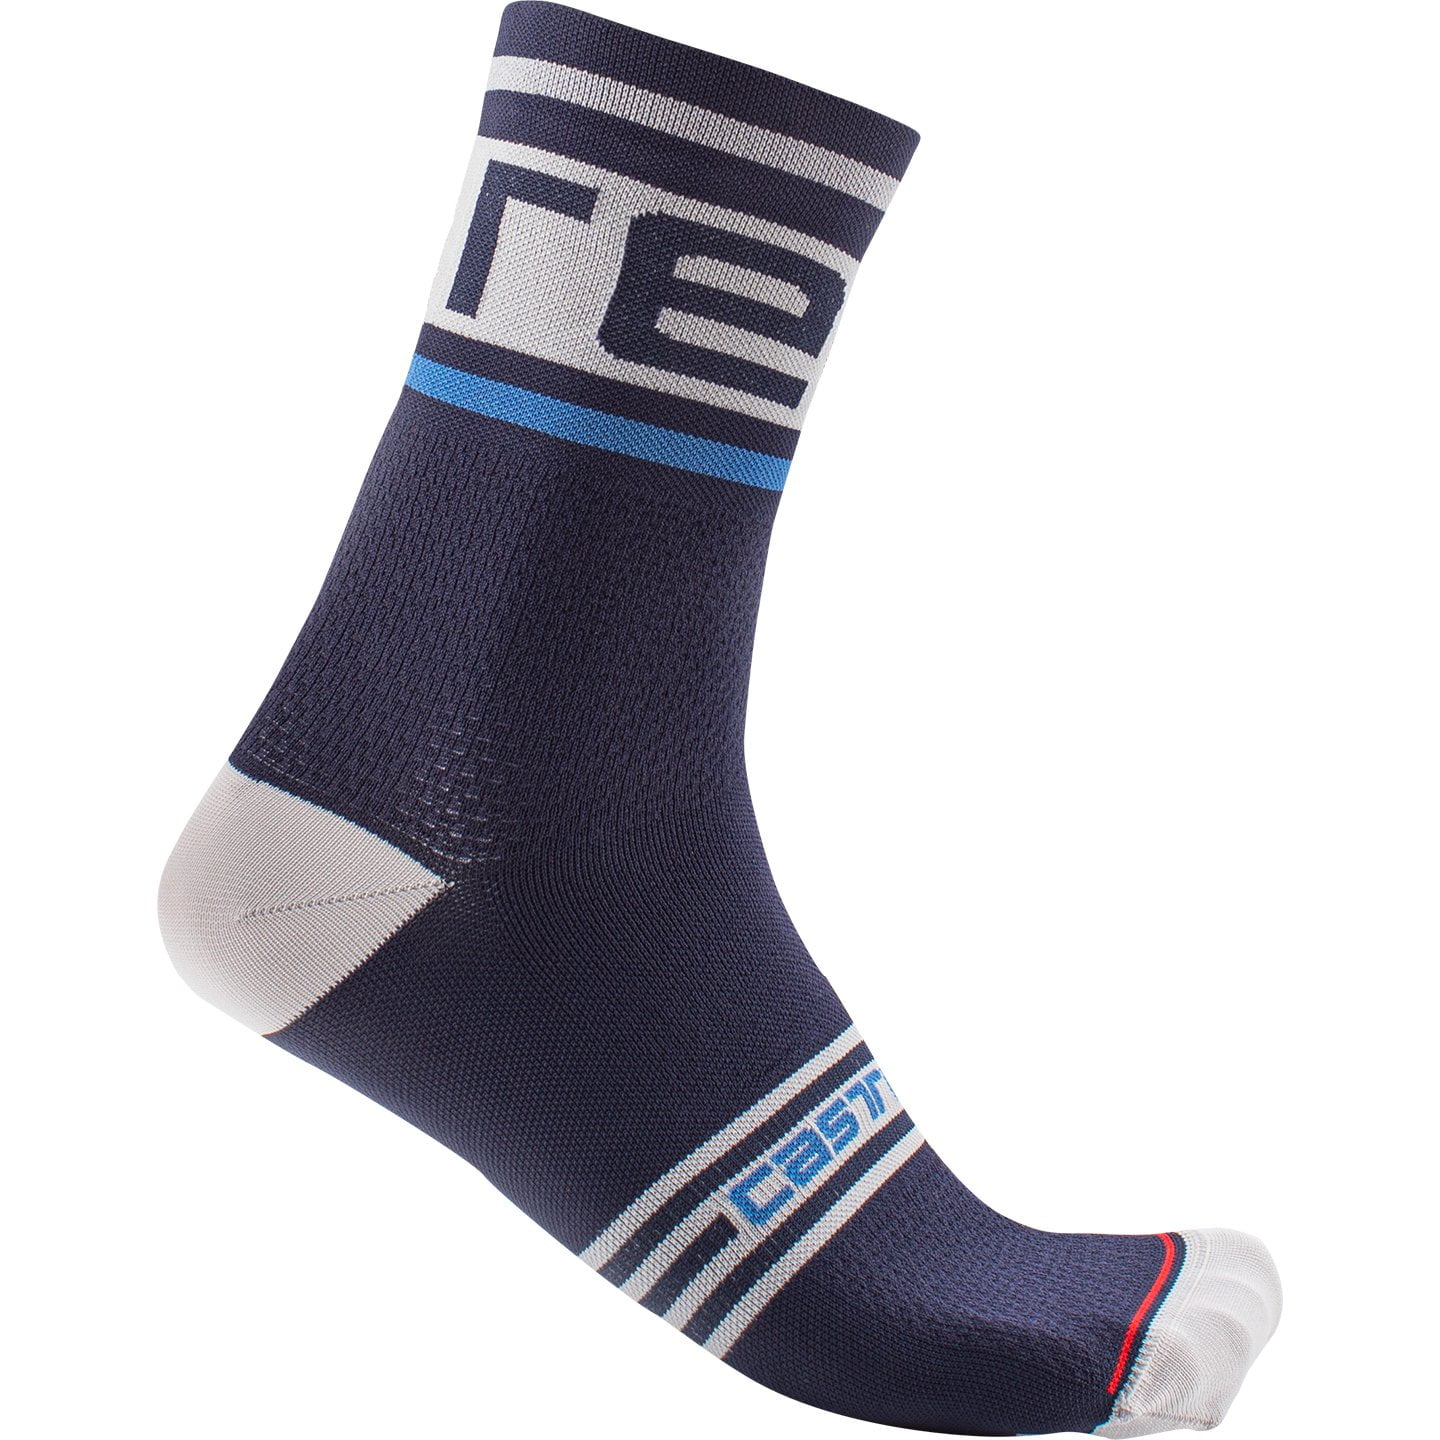 Prologo 15 Cycling Socks Cycling Socks, for men, size 2XL, MTB socks, Cycling clothing